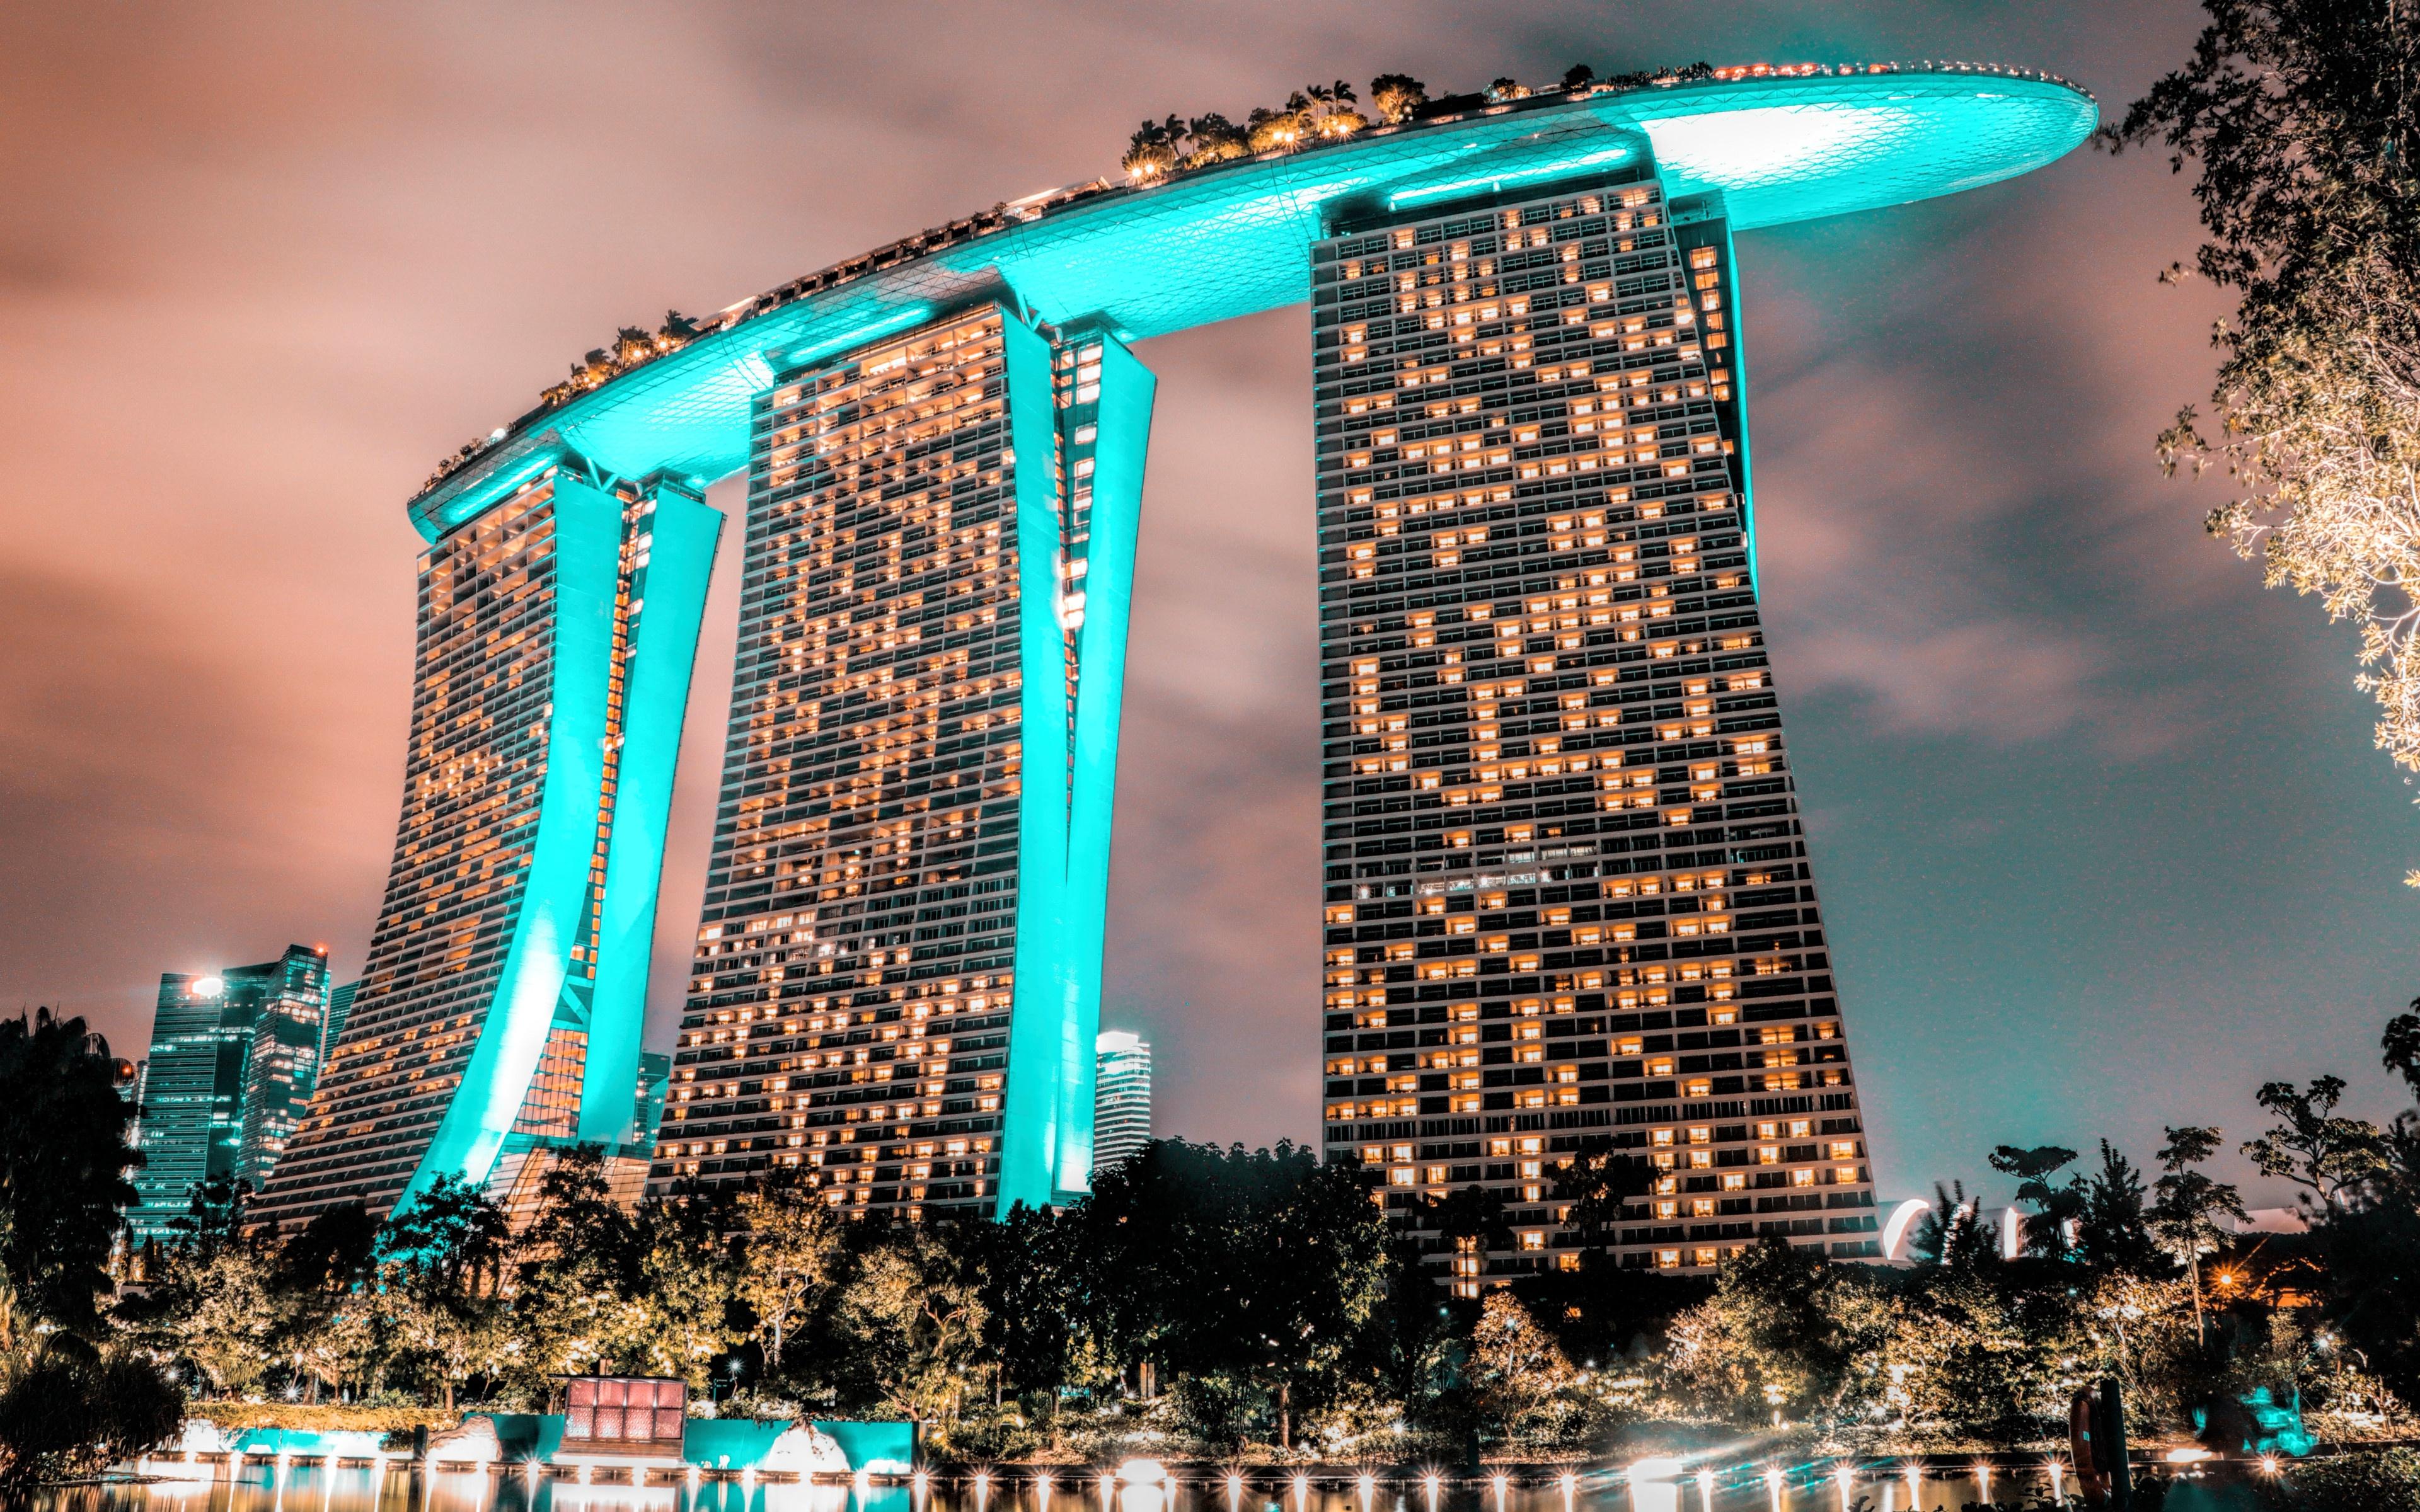 Download wallpaper Marina Bay Sands Hotel, Singapore